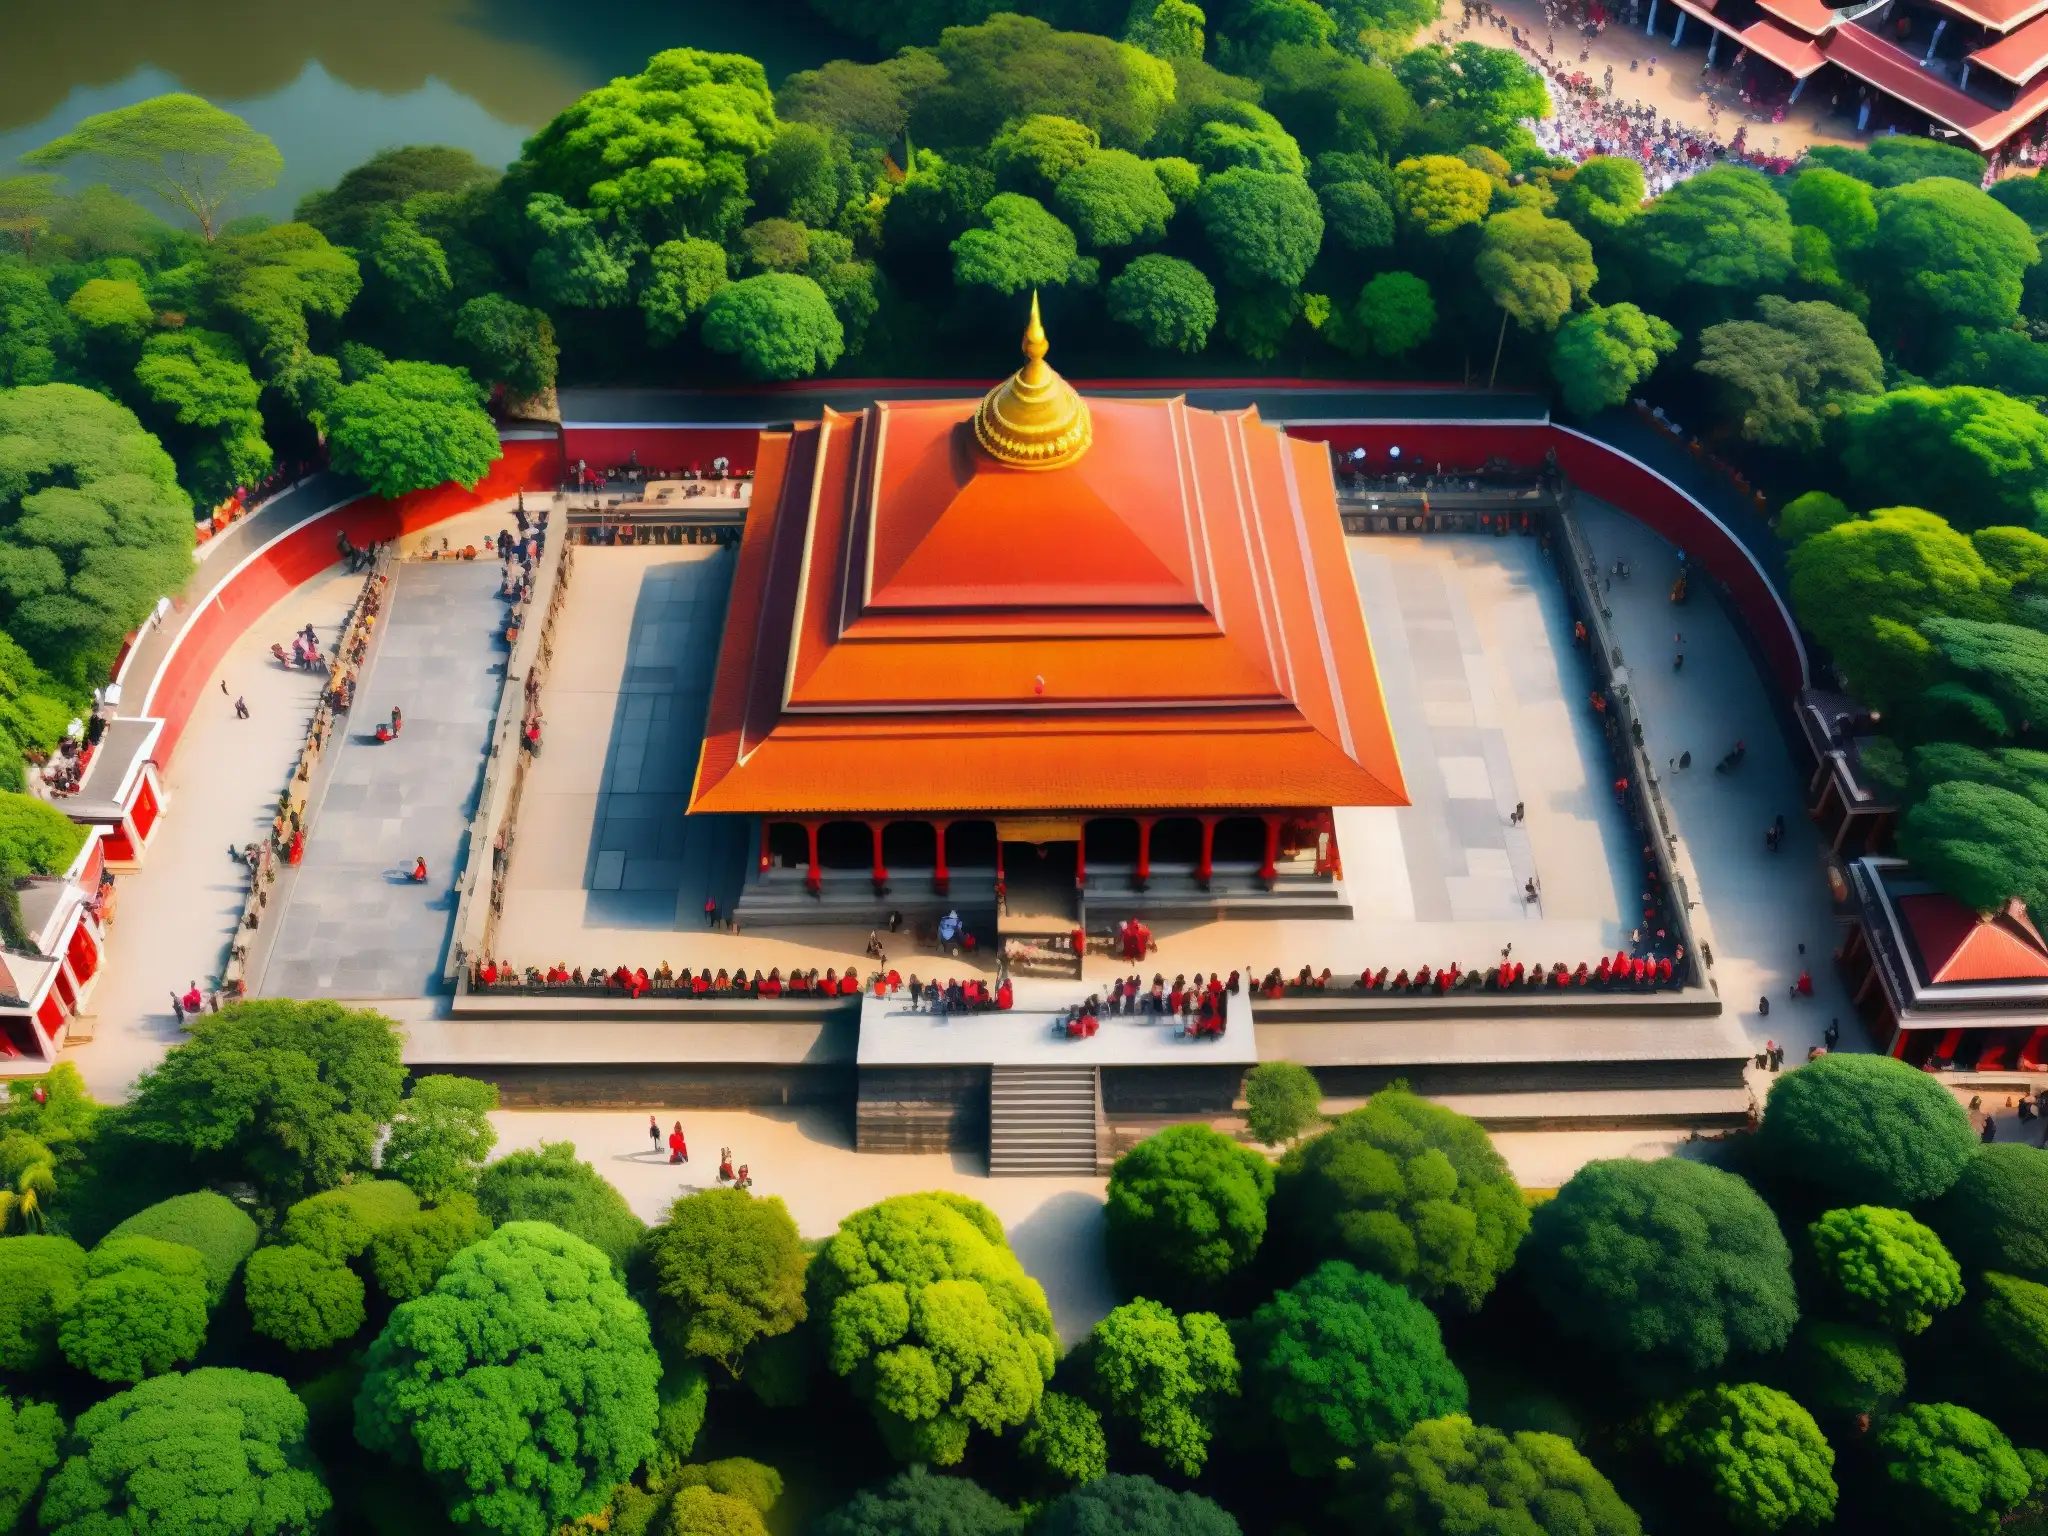 Misterioso templo Kamakhya: devotos, rituales y prácticas ocultas en vibrante imagen aérea